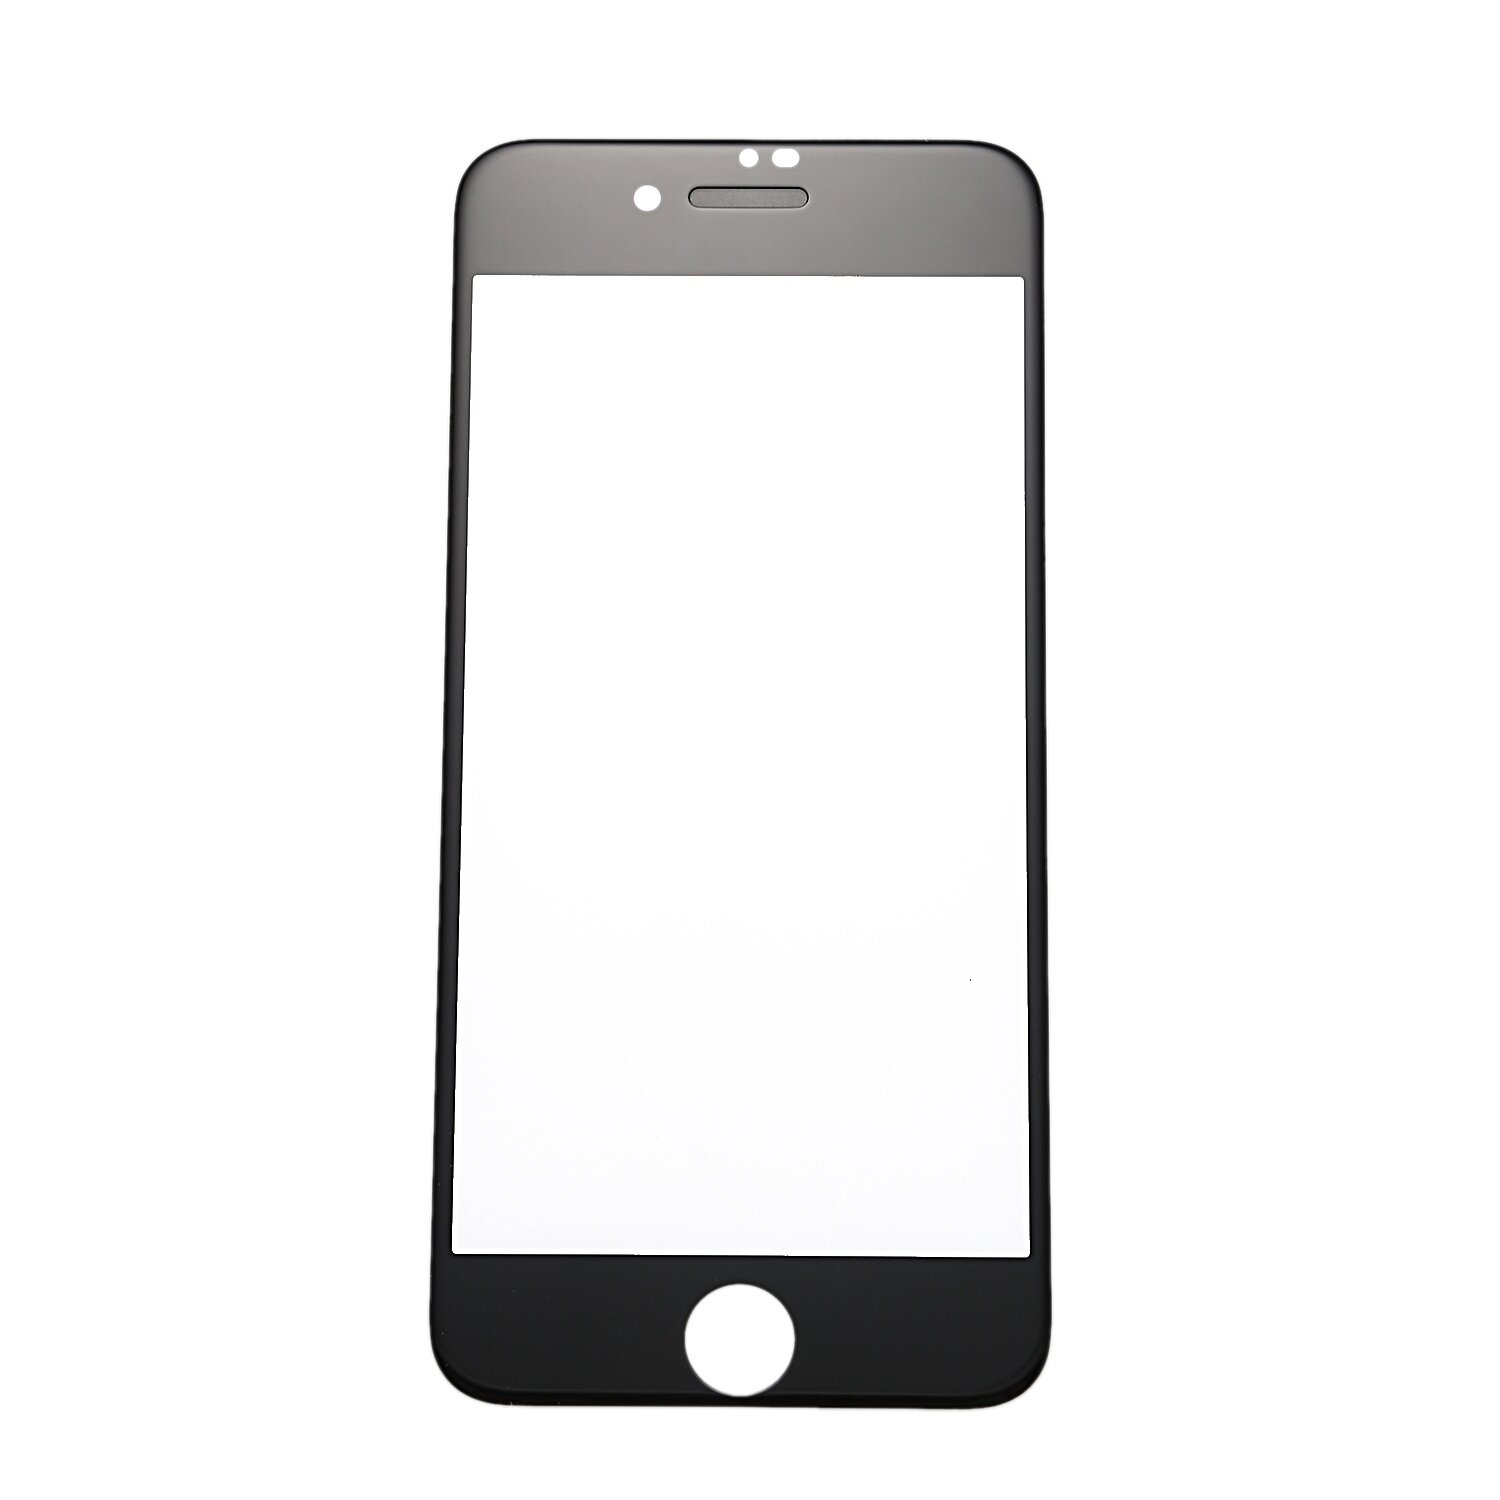 Komass iPhone 6/7/8 Plus 5.5" Tempered Glass, Anti-Glare Black (Screen Protector)